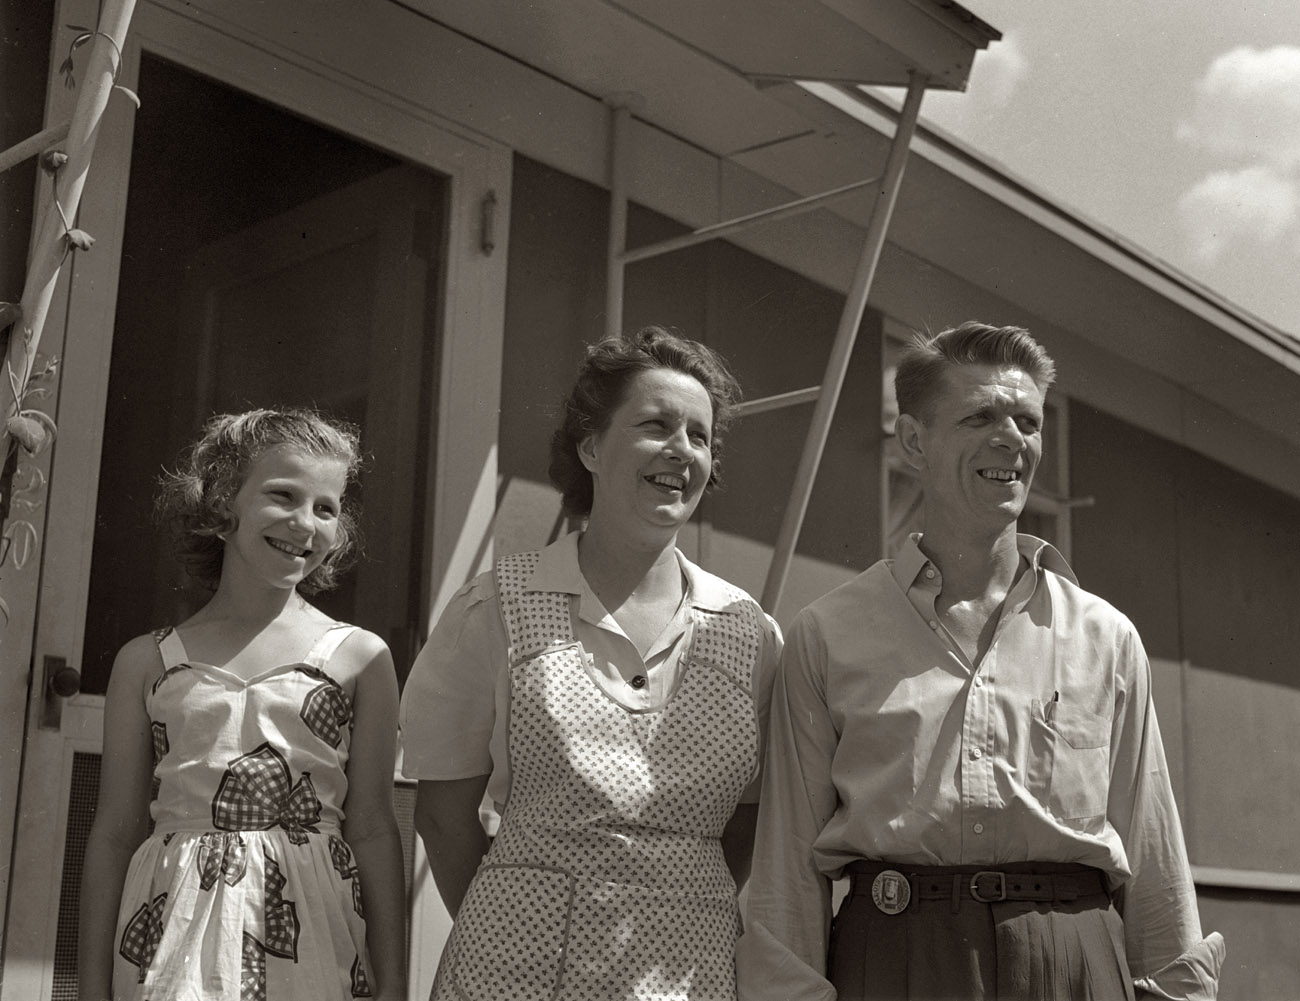 Ретро малолетних. Молодежь 40-х годов. Лето 1940. Американская семья 40-х годов. Молодежь сороковых годов.